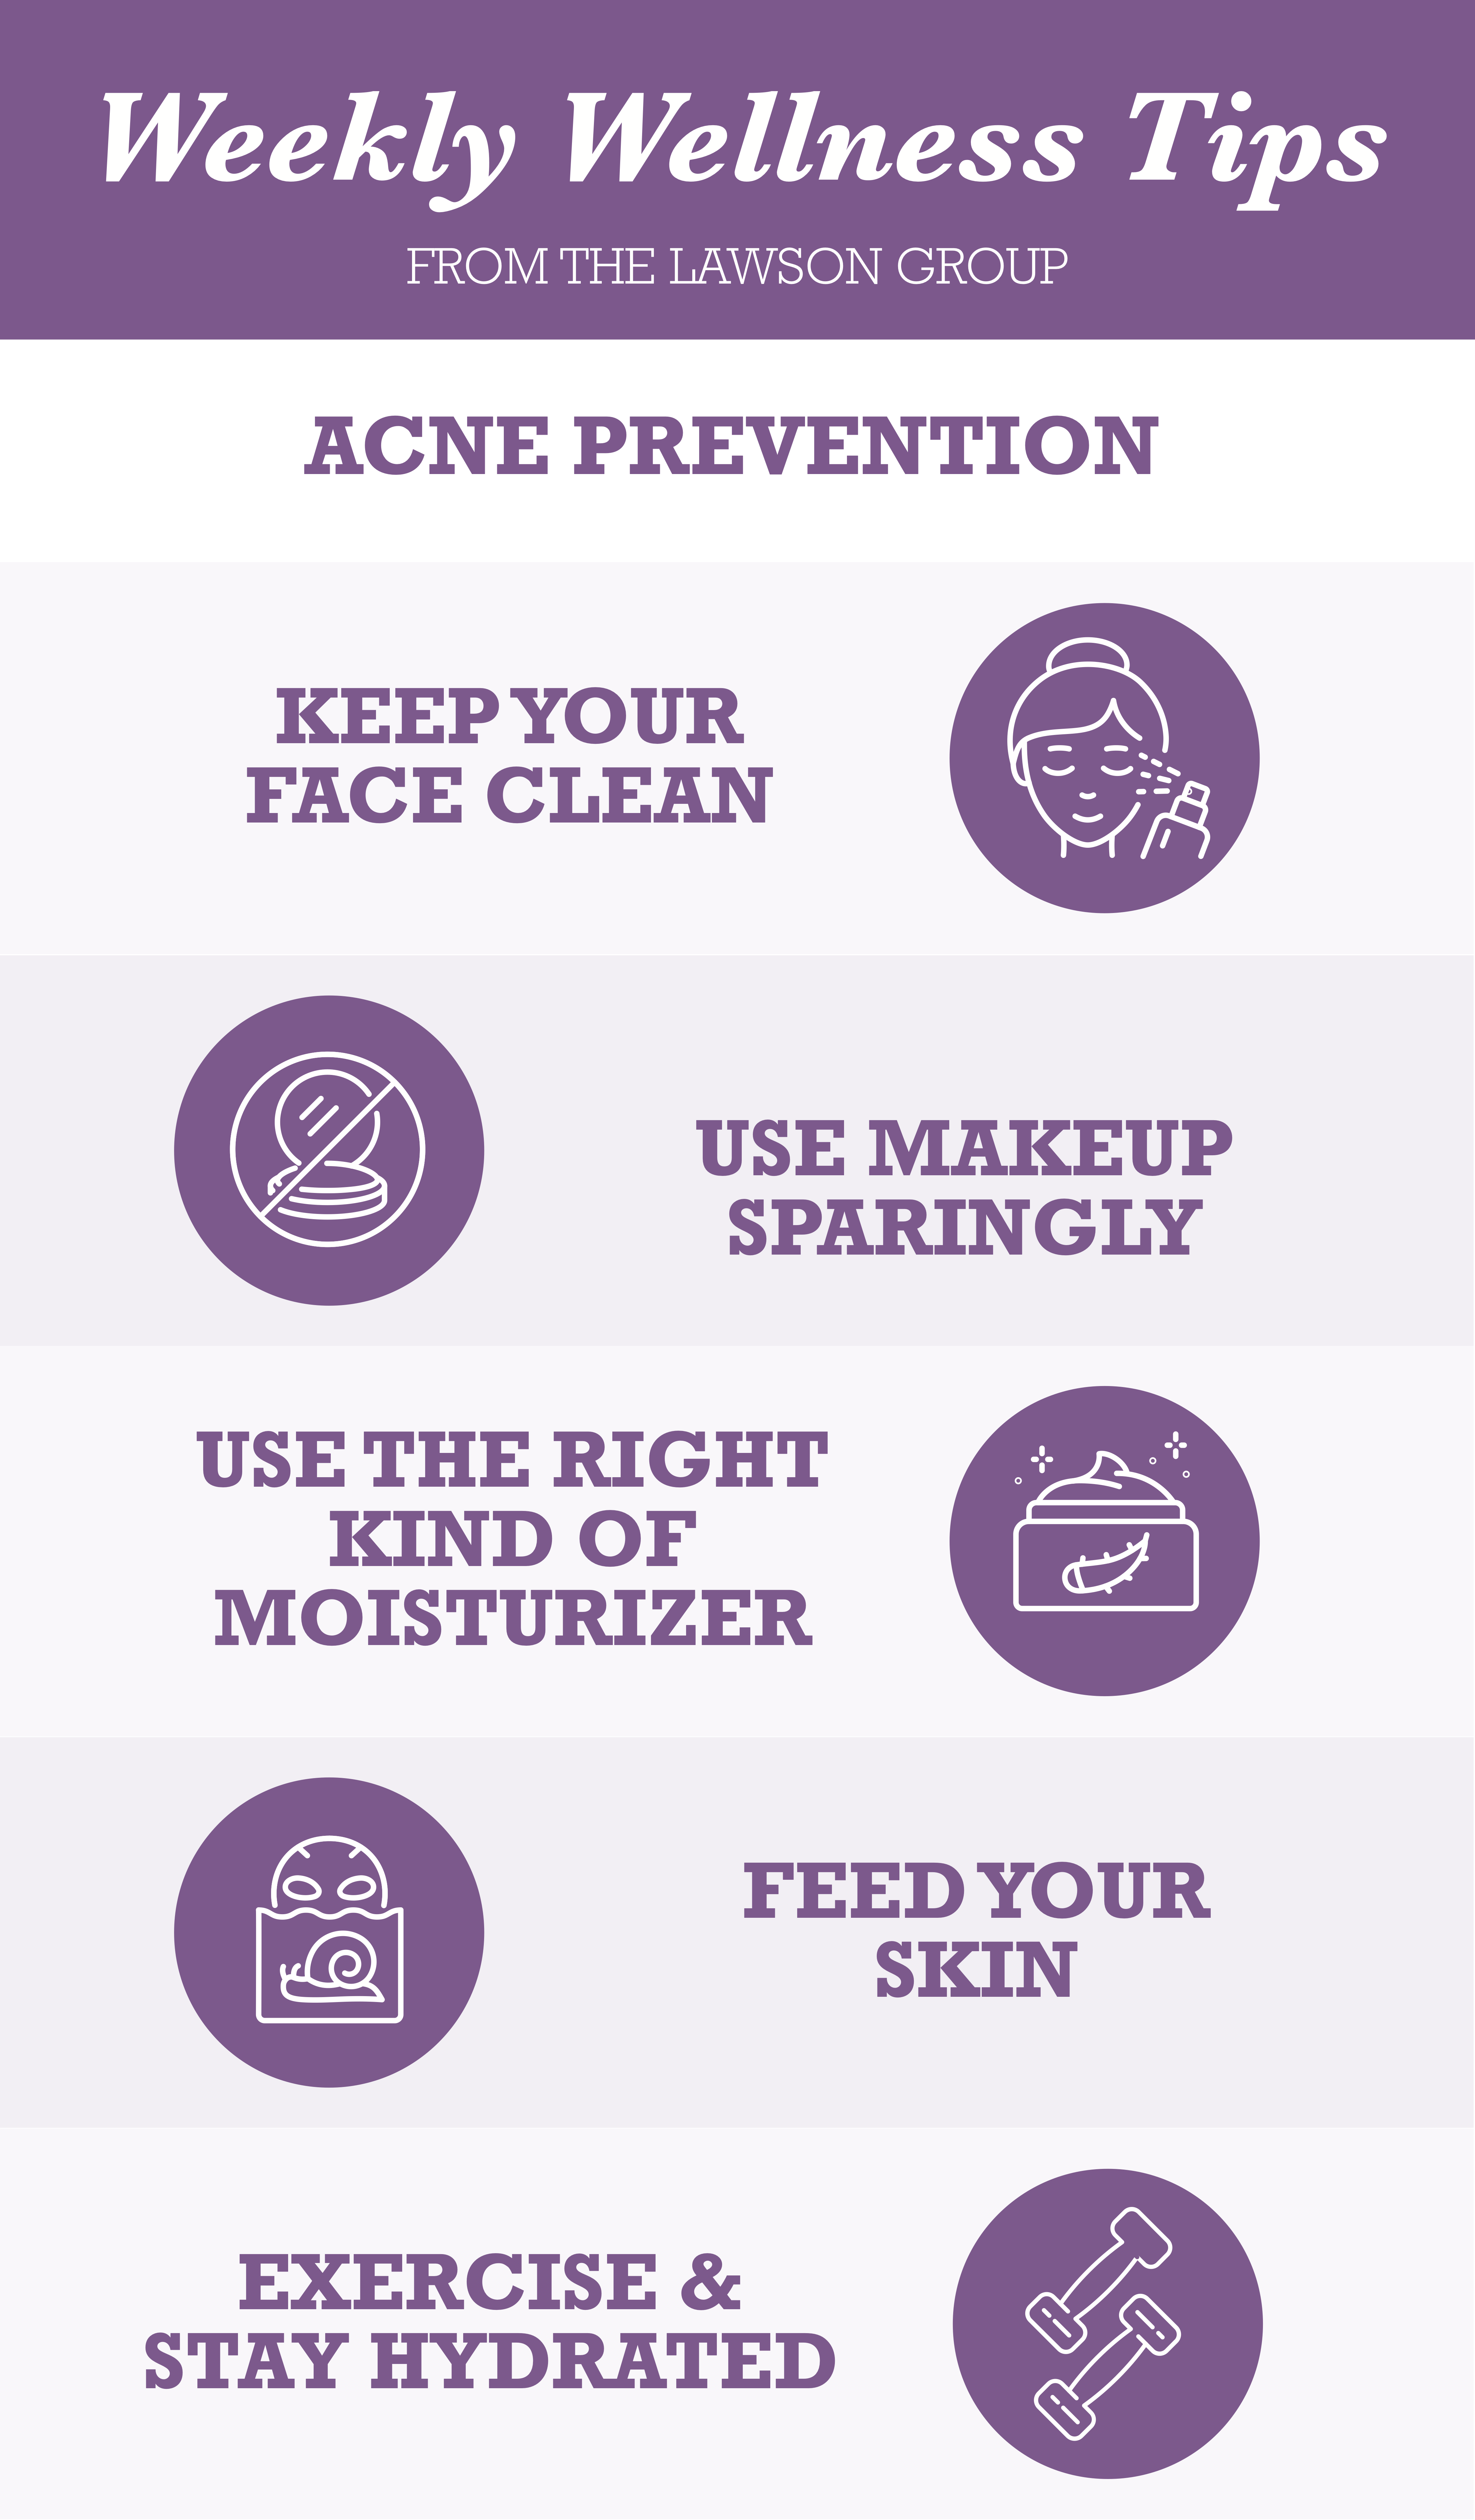 TLG22005 Wellness Tips  Acne Prevention Infographic